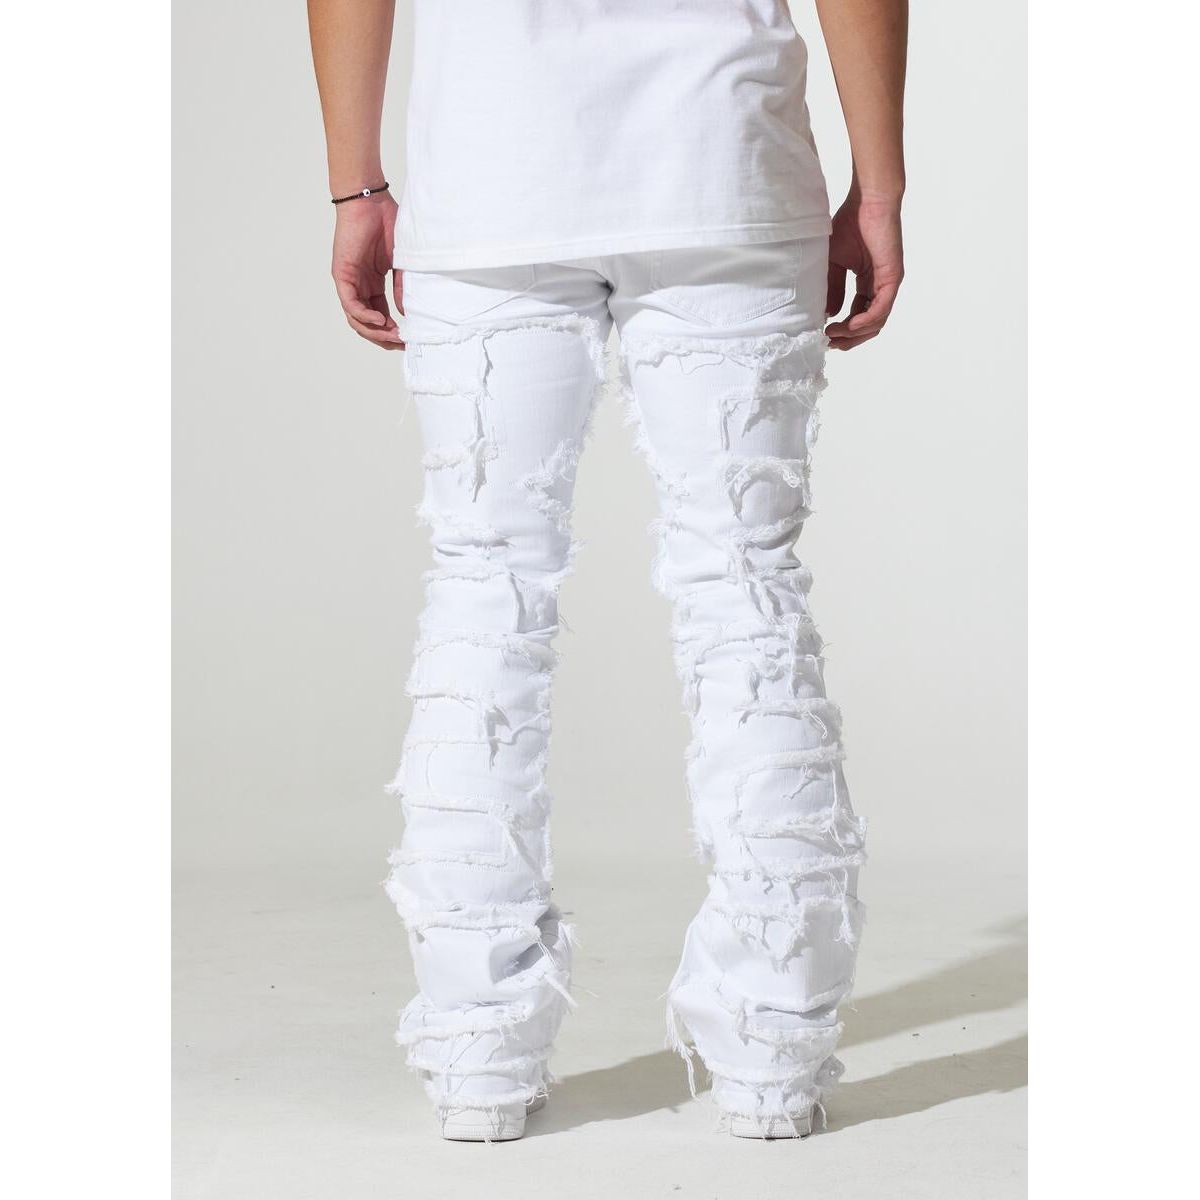 Crysp Denim Arch White Distress Jeans (CRYSPF123-24)